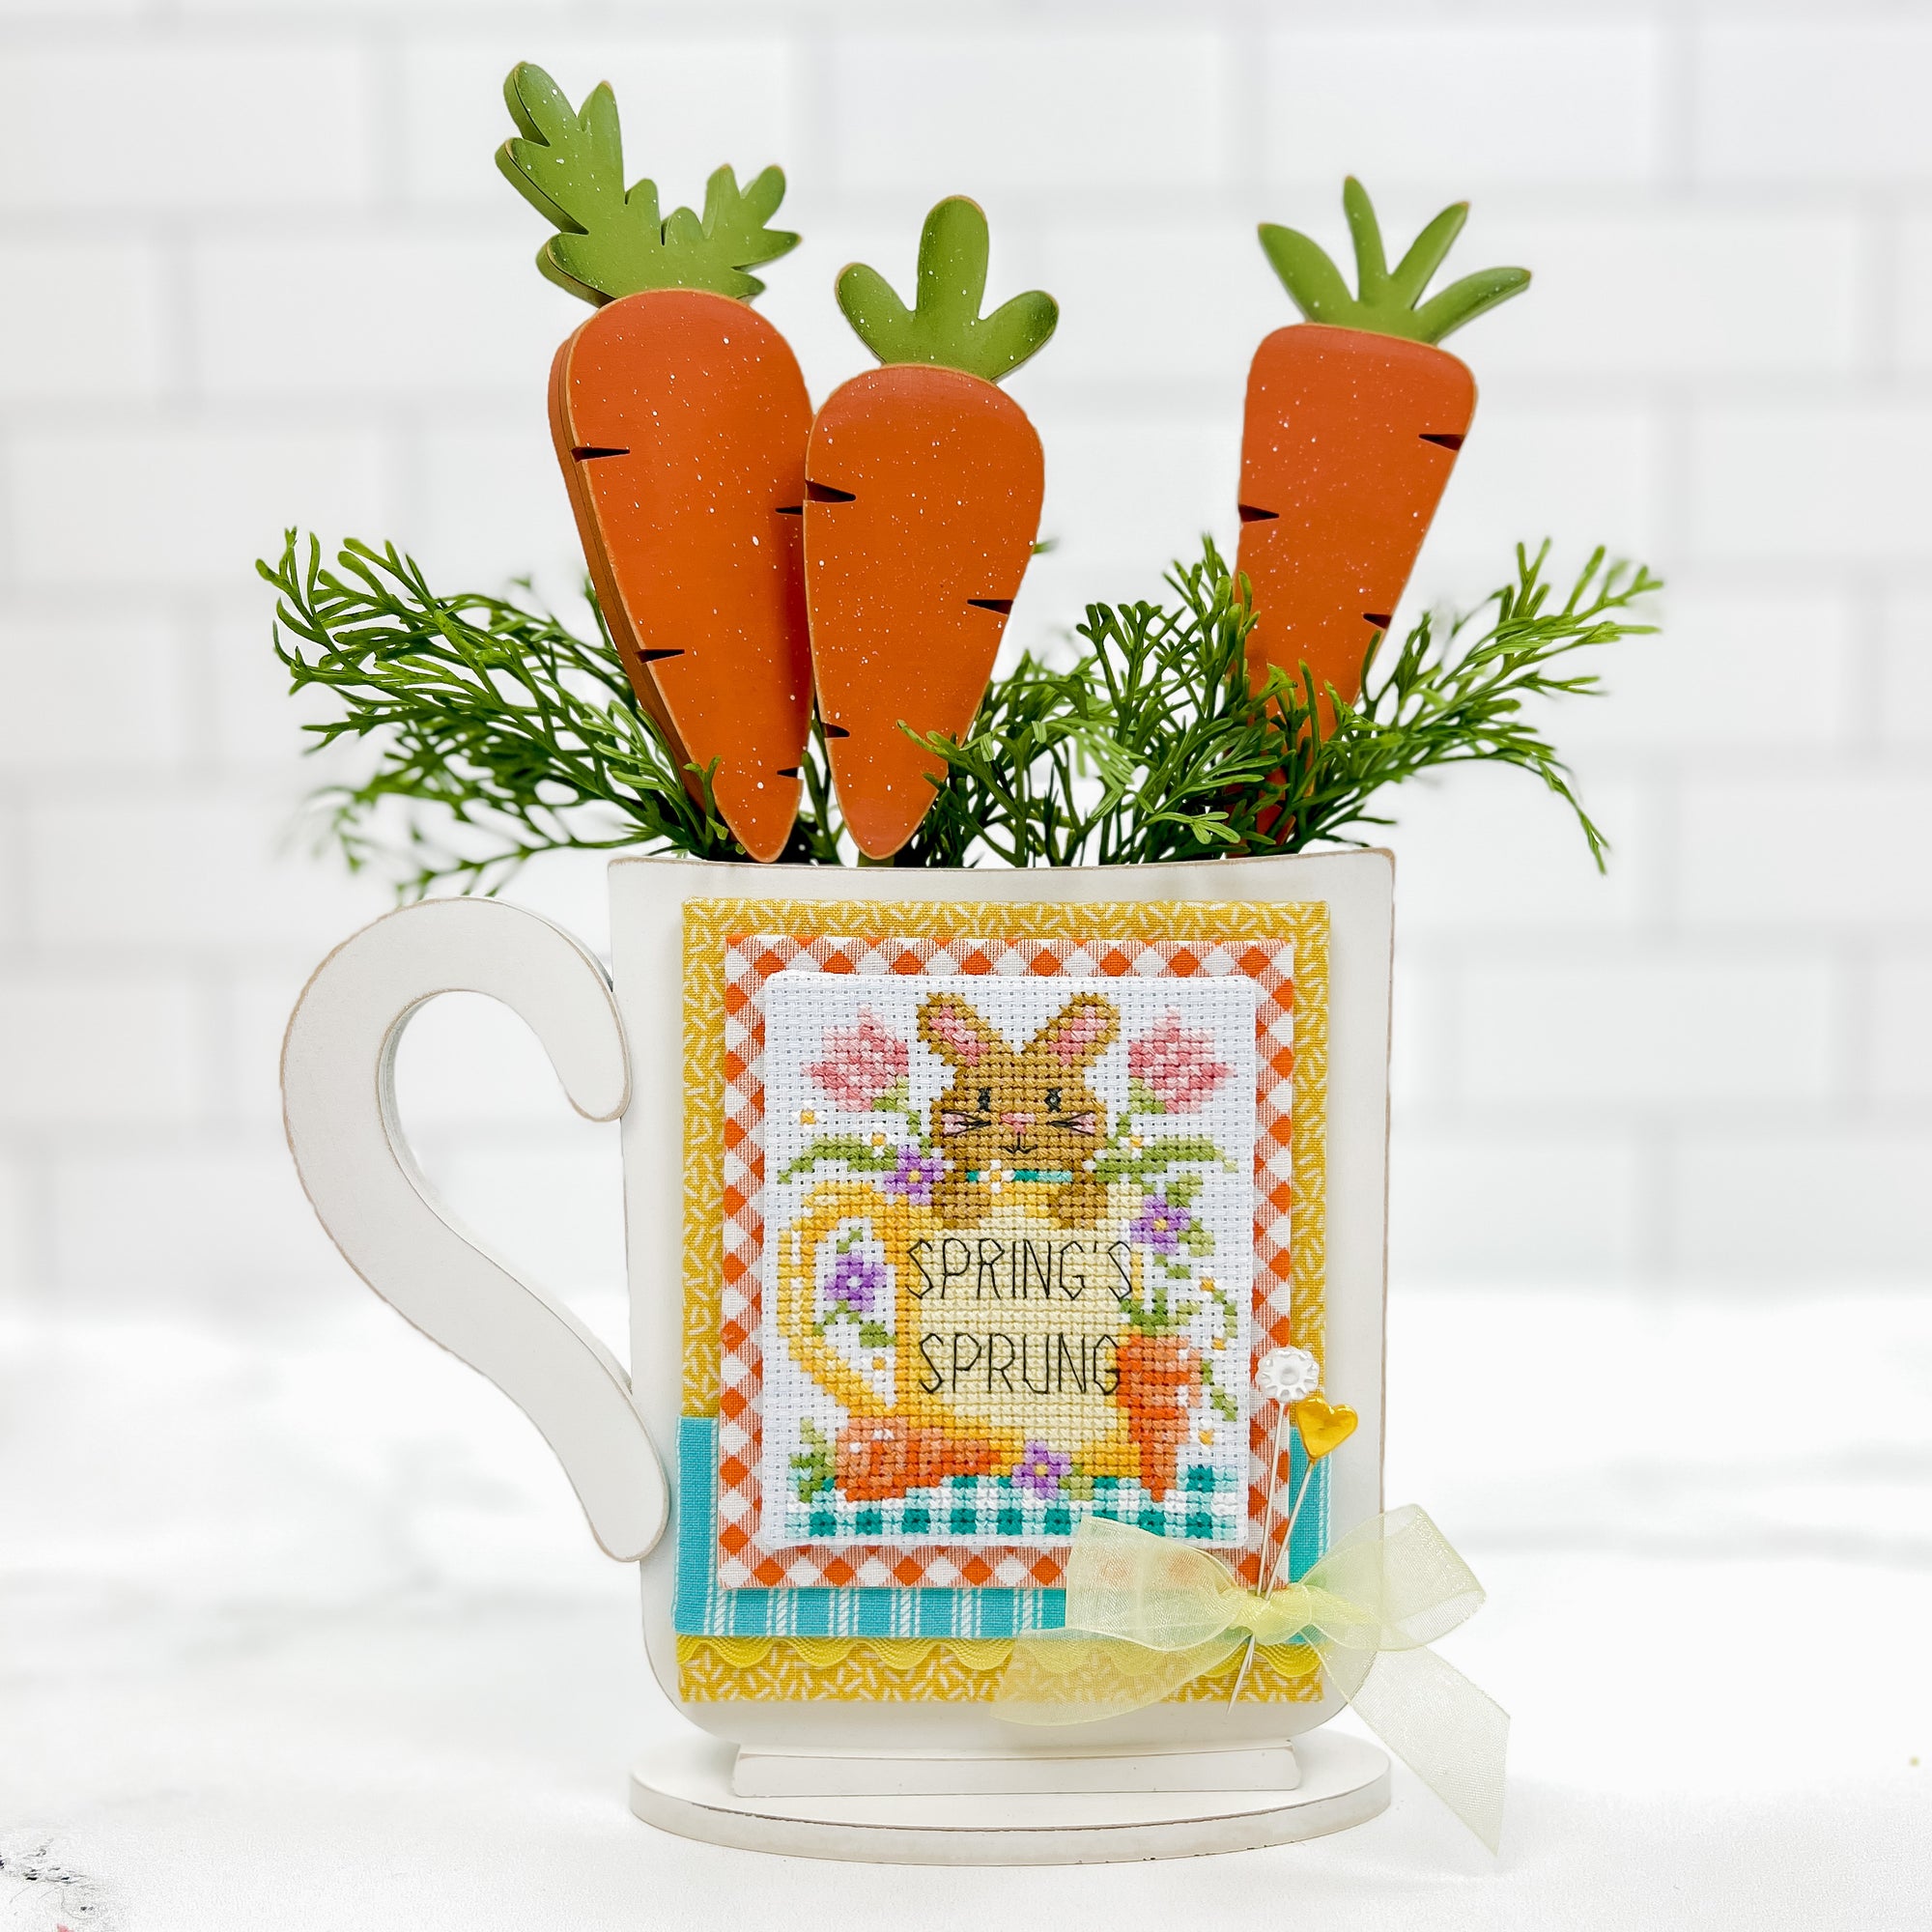 Cross stitch display mug with orange wood carrots inside the mug. Cross stitch design is a bunny by Shannon Christine Designs